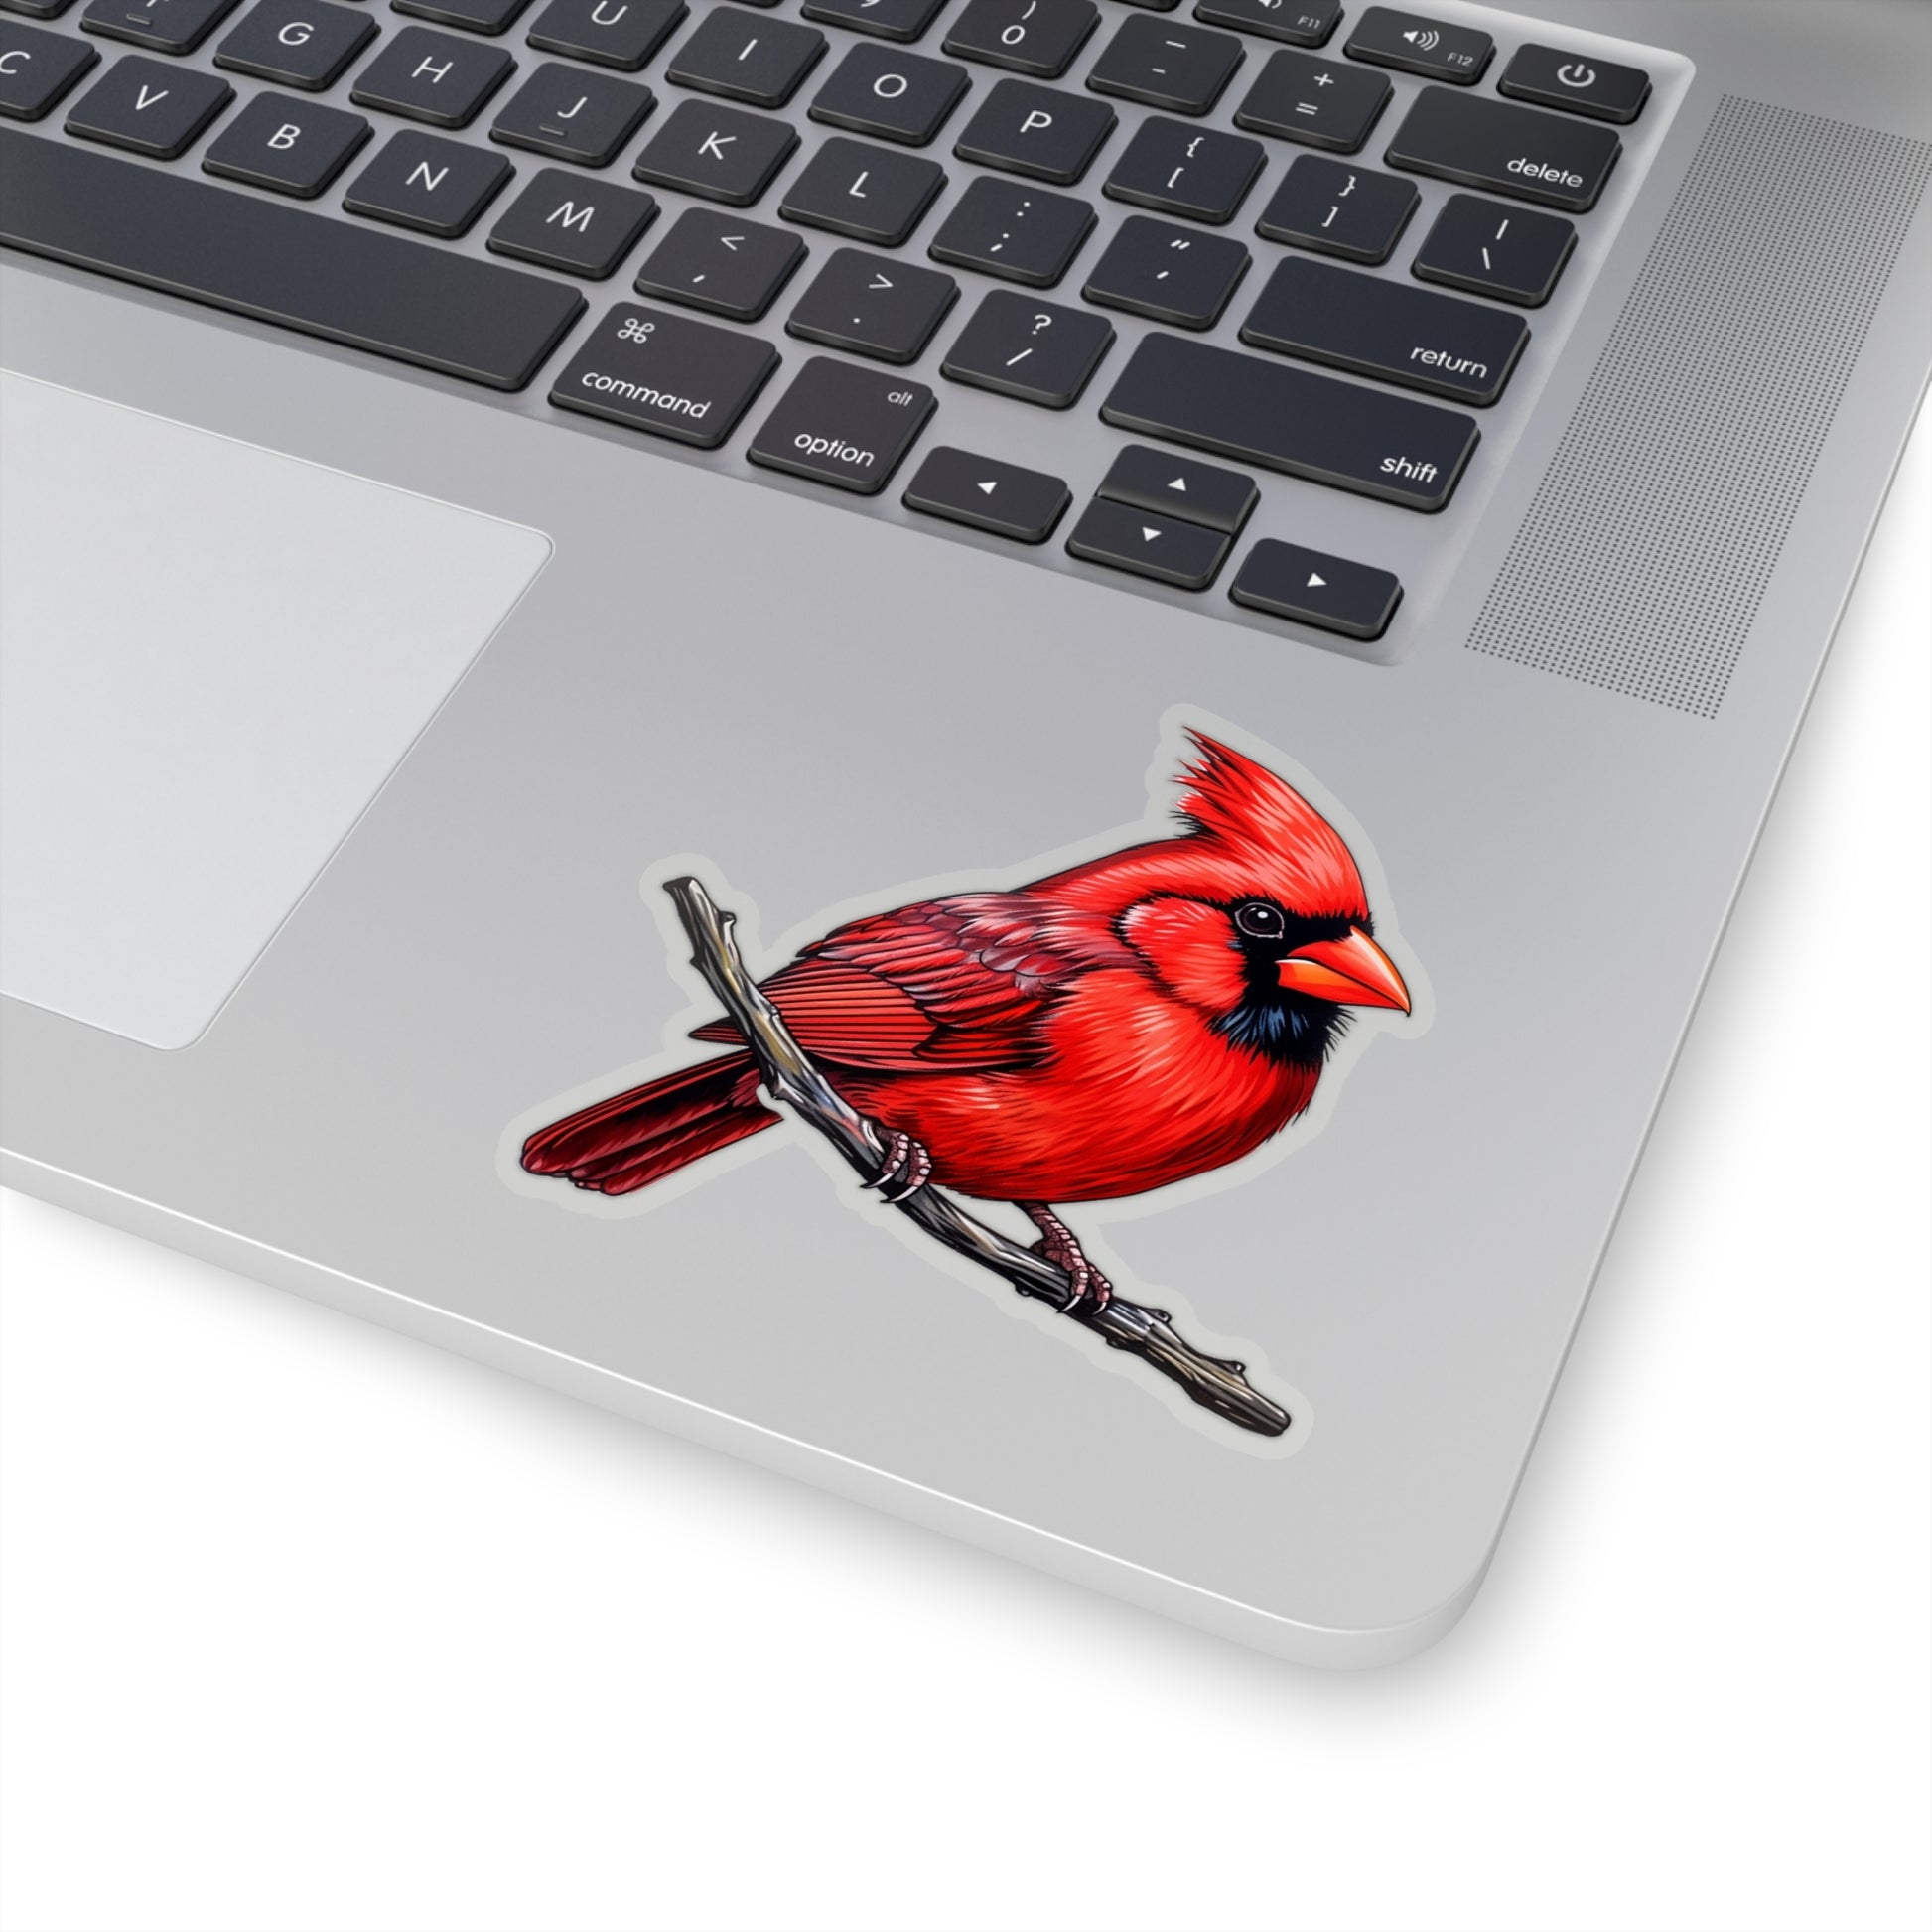 Cardinal Sticker Decal, Red Bird Art Vinyl Laptop Cute Waterbottle Tumbler Car Waterproof Bumper Clear Aesthetic Die Cut Wall Starcove Fashion